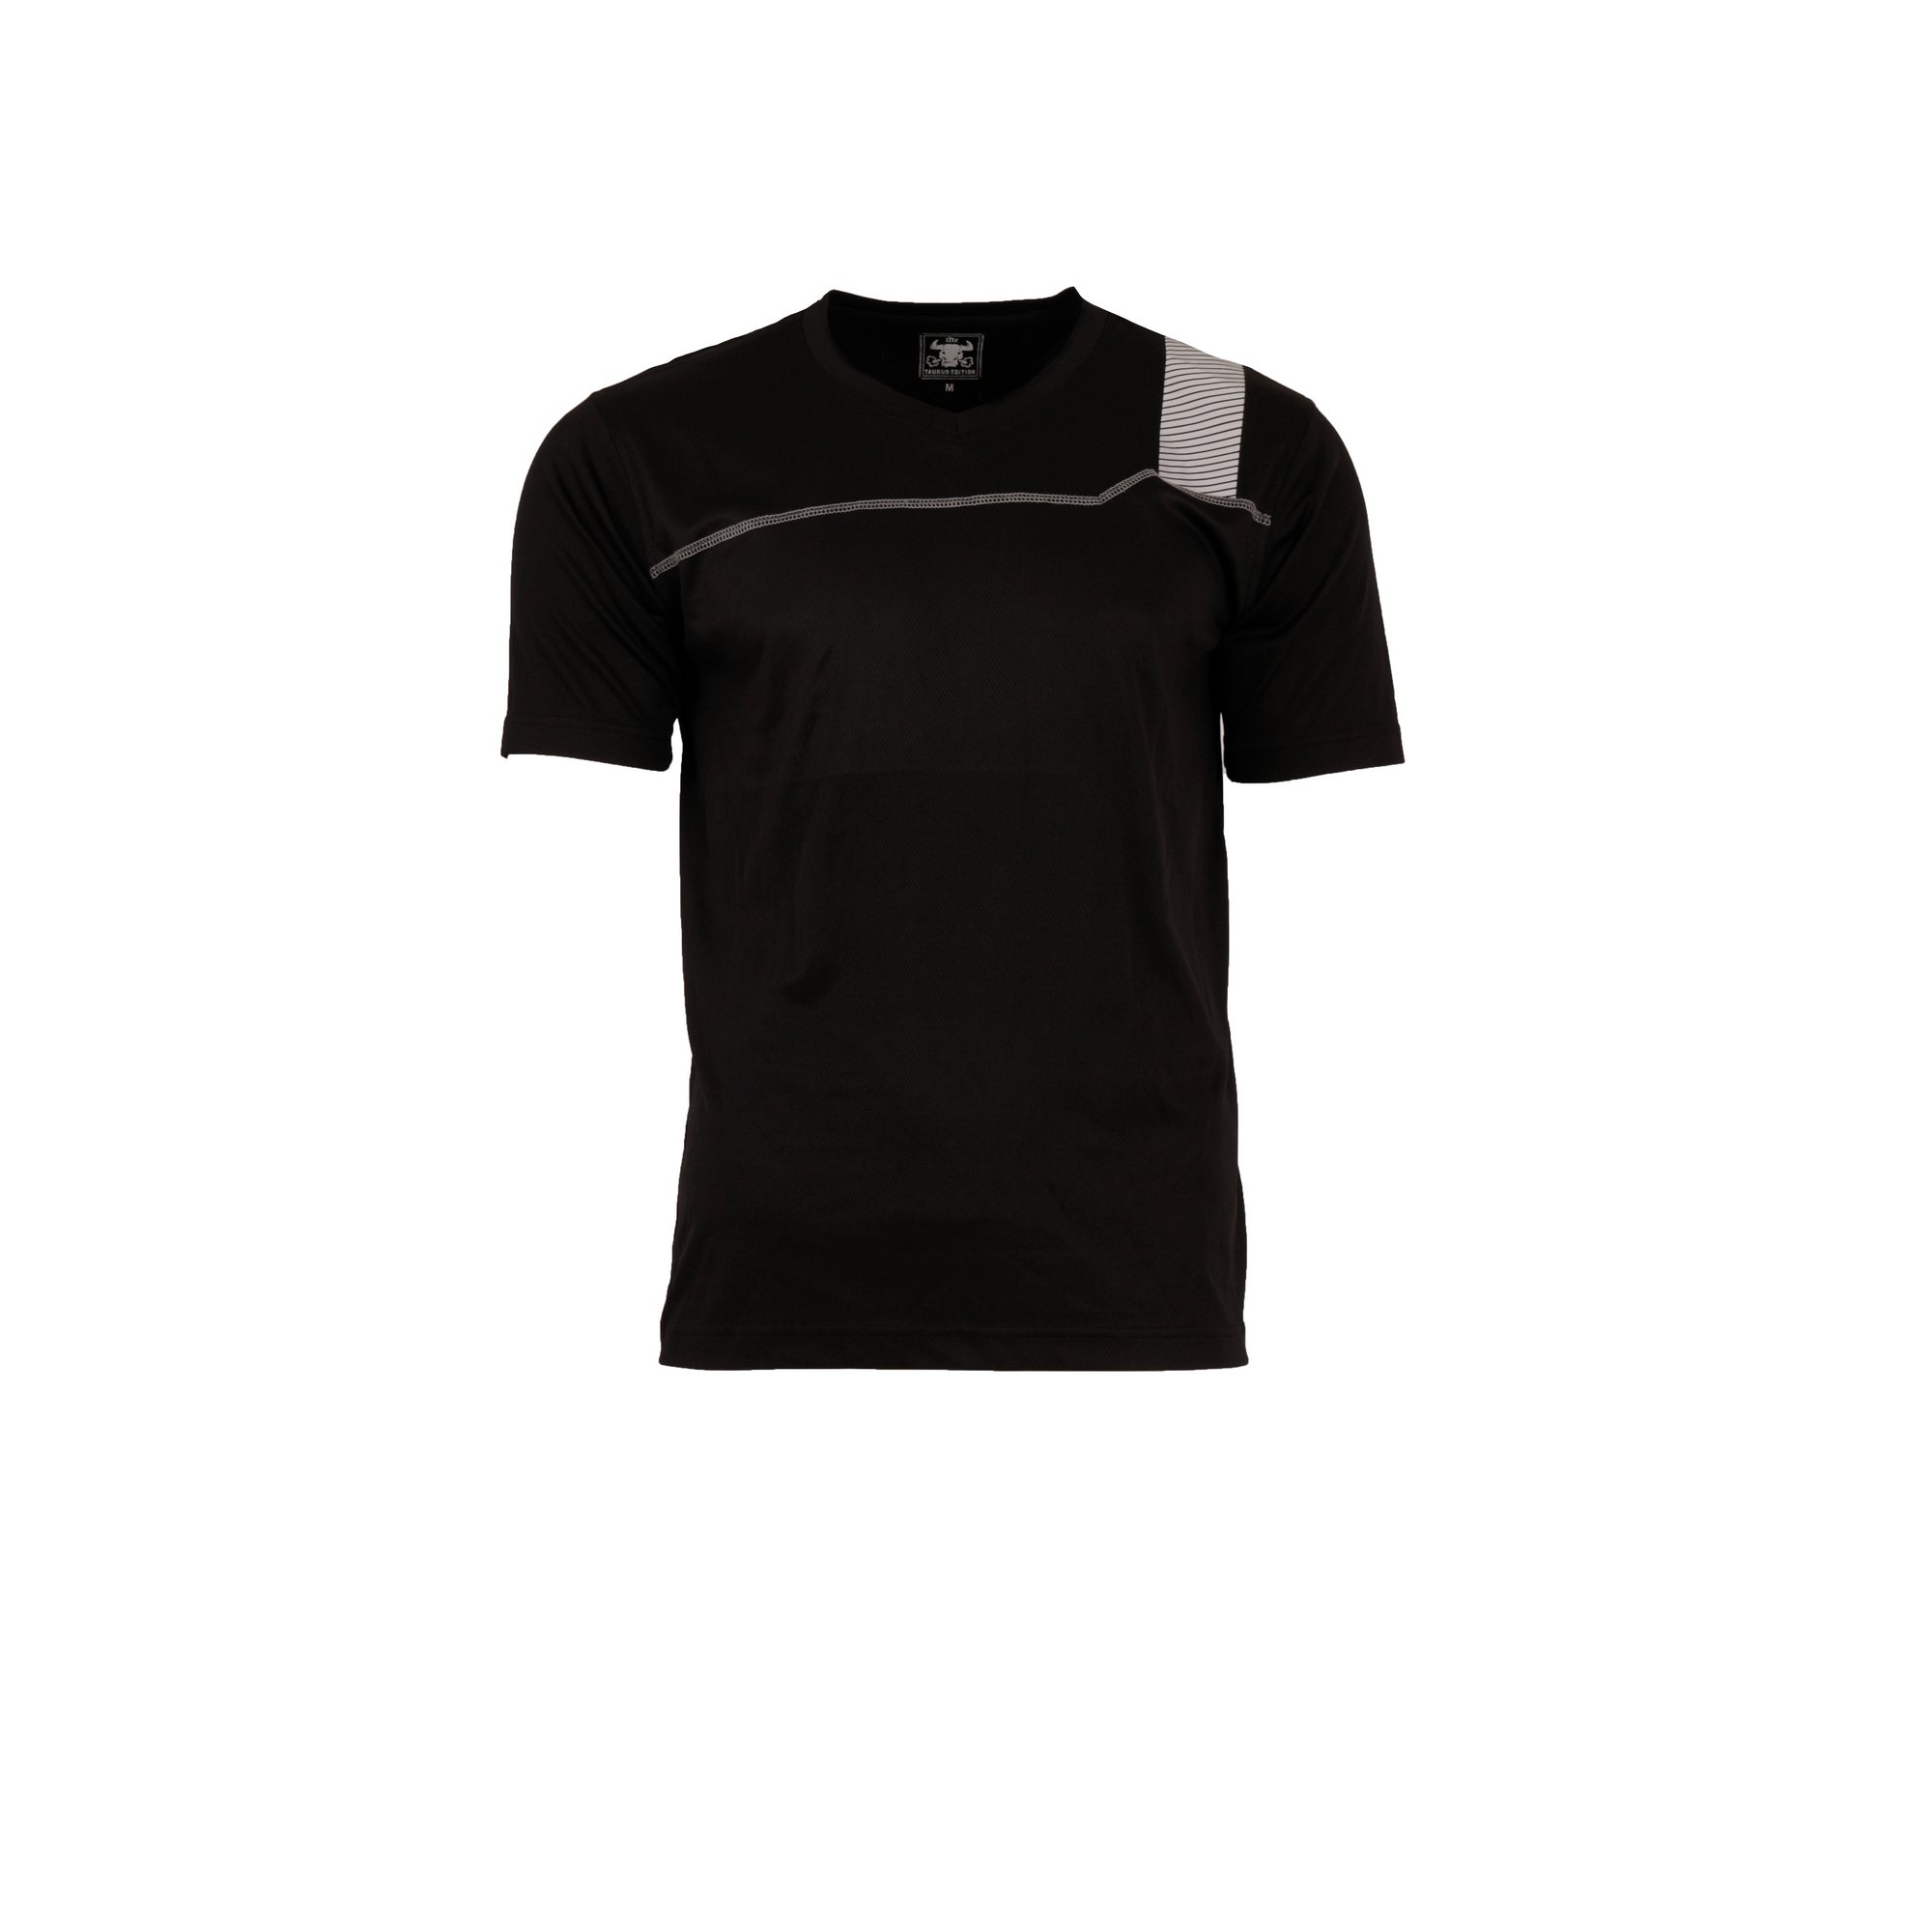 T-Shirt 'Taurus' schwarz XXL + product picture